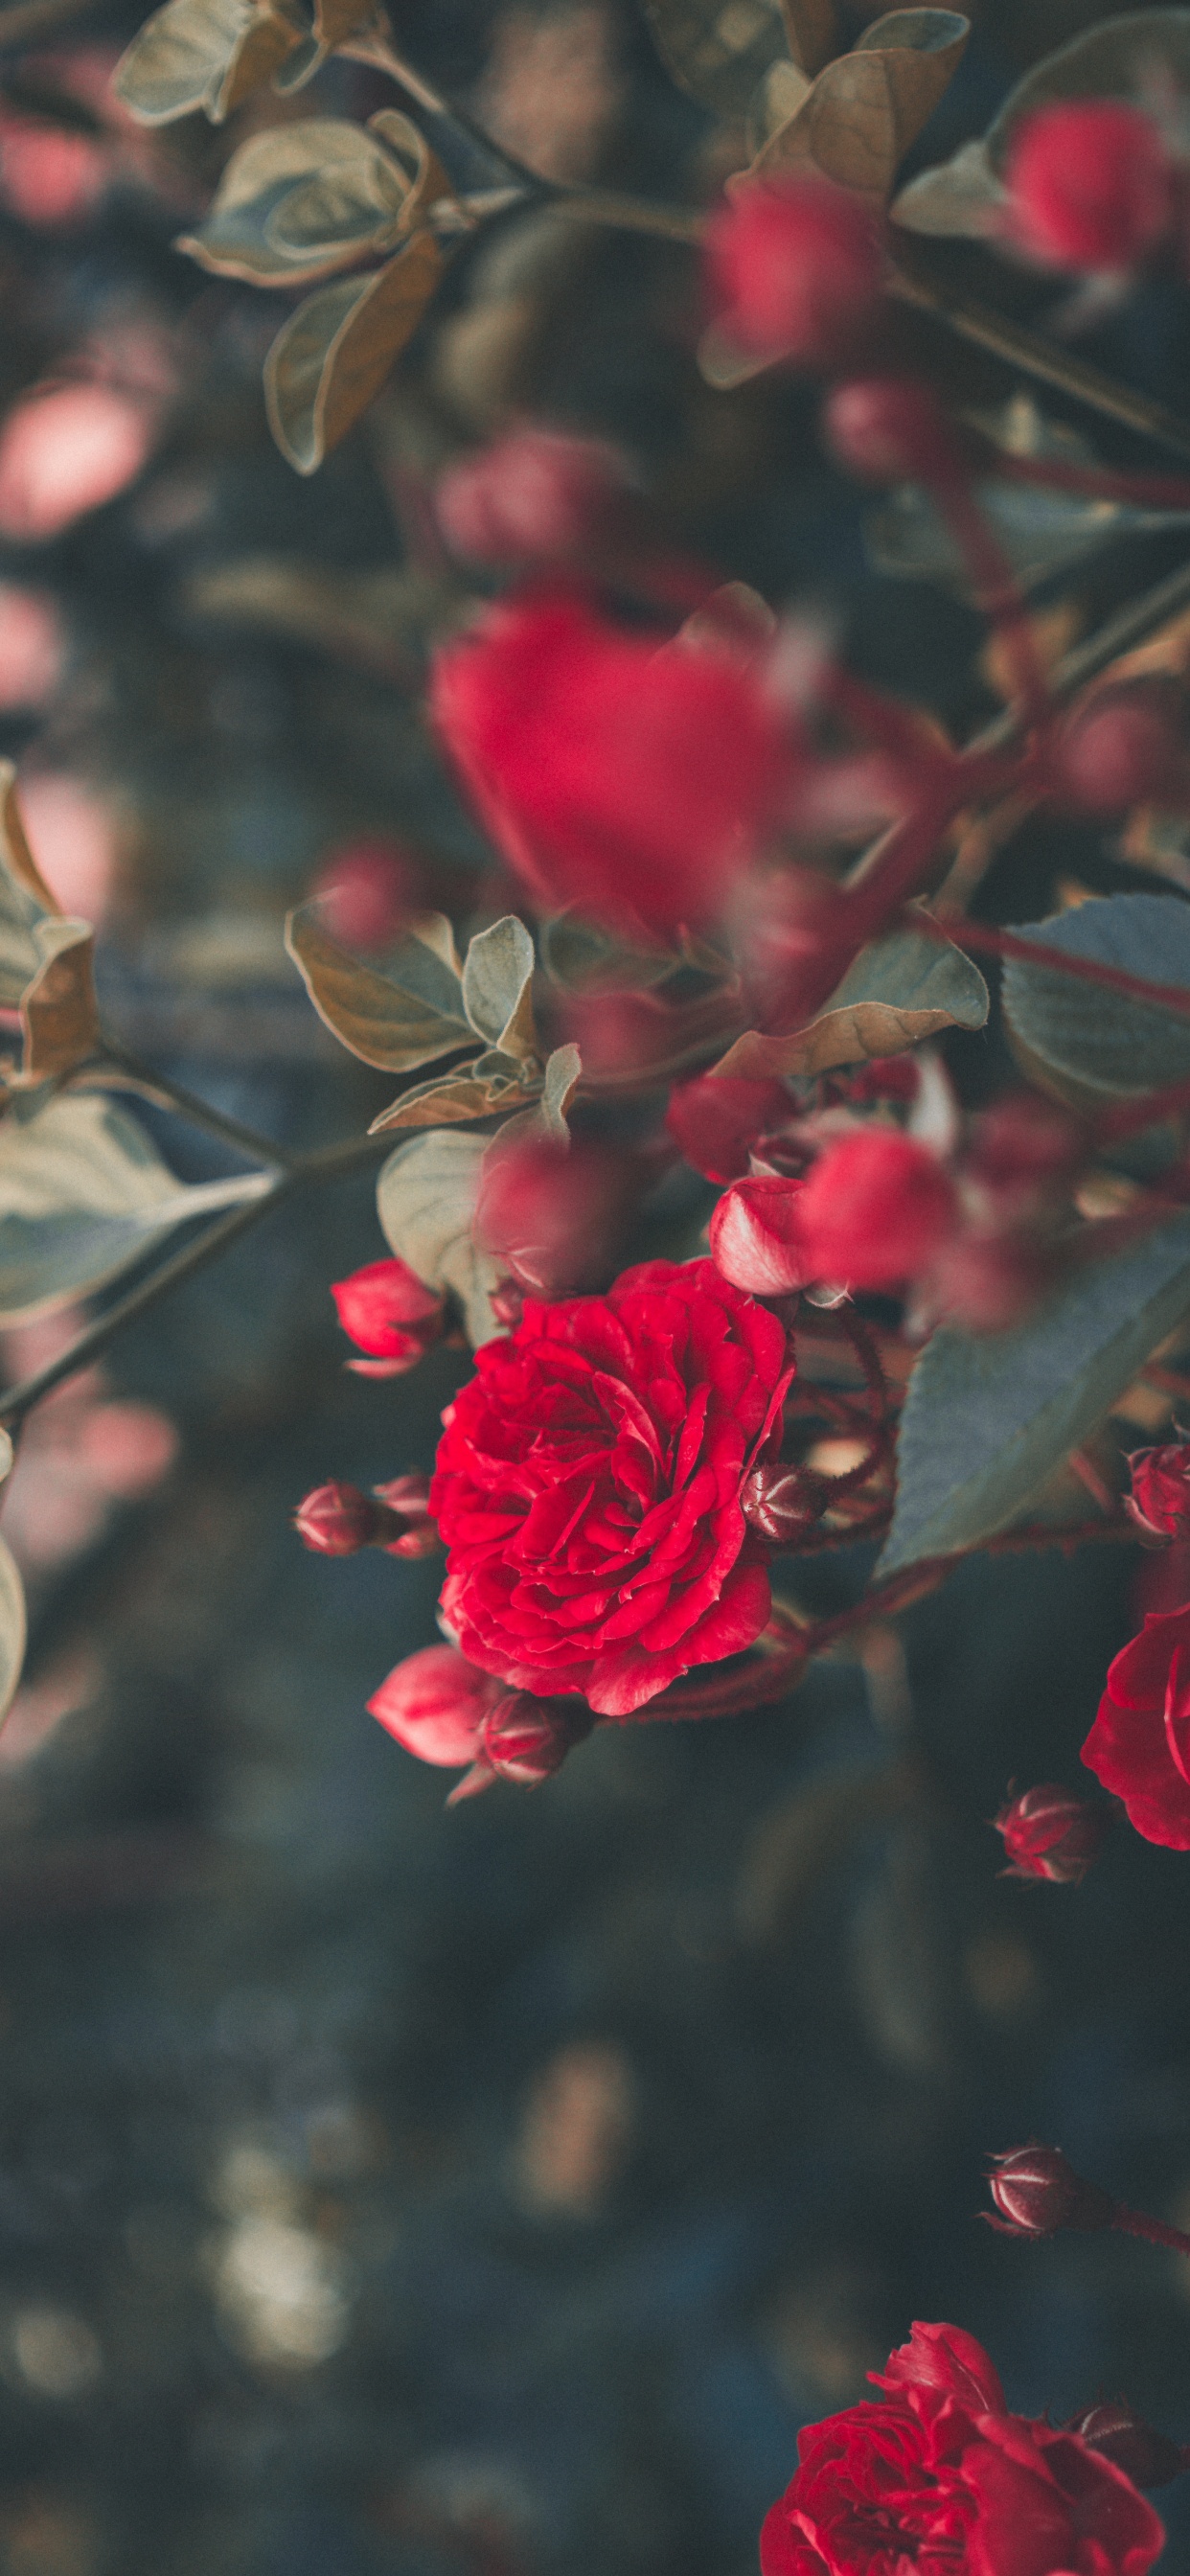 Rose Rouge en Fleurs Pendant la Journée. Wallpaper in 1242x2688 Resolution